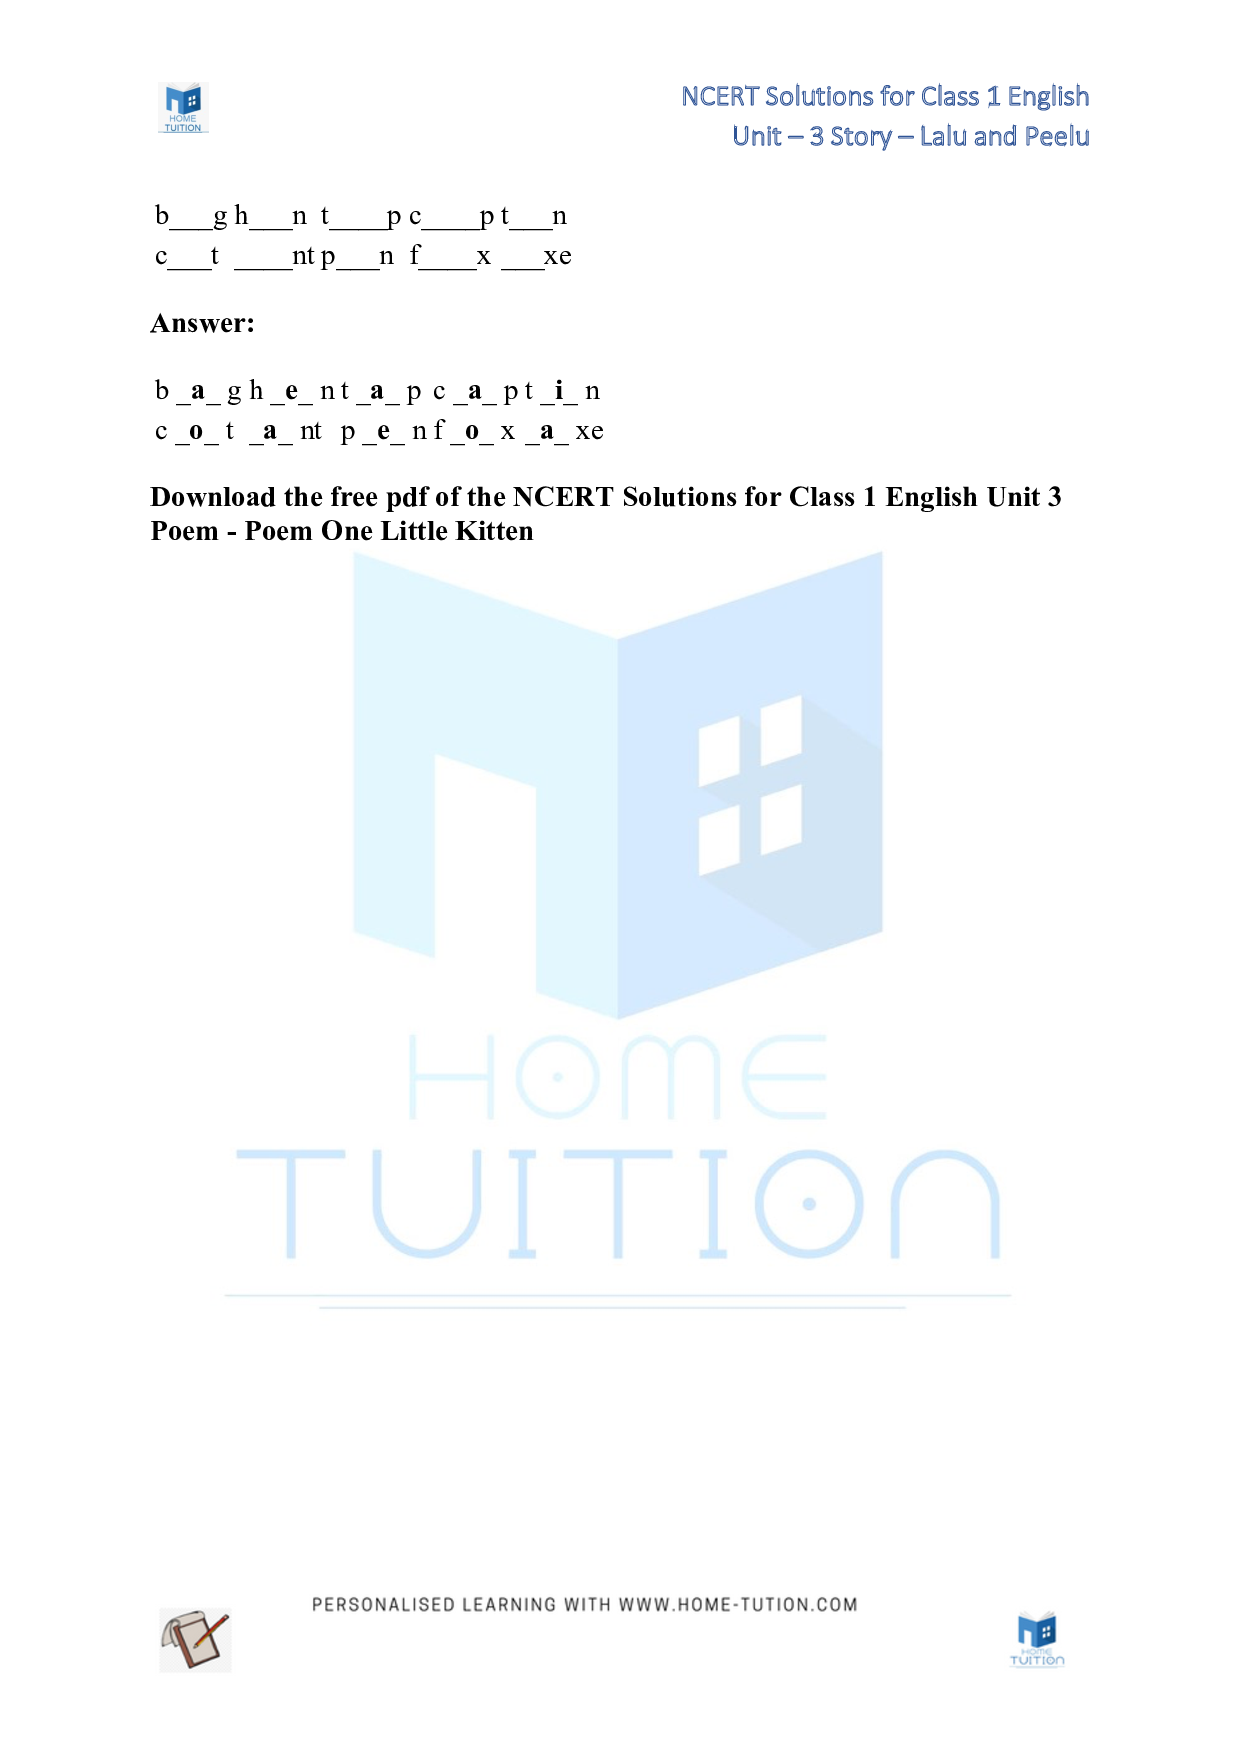 NCERT Solutions for Class 1 English Unit 3 Poem - Poem One Little Kitten